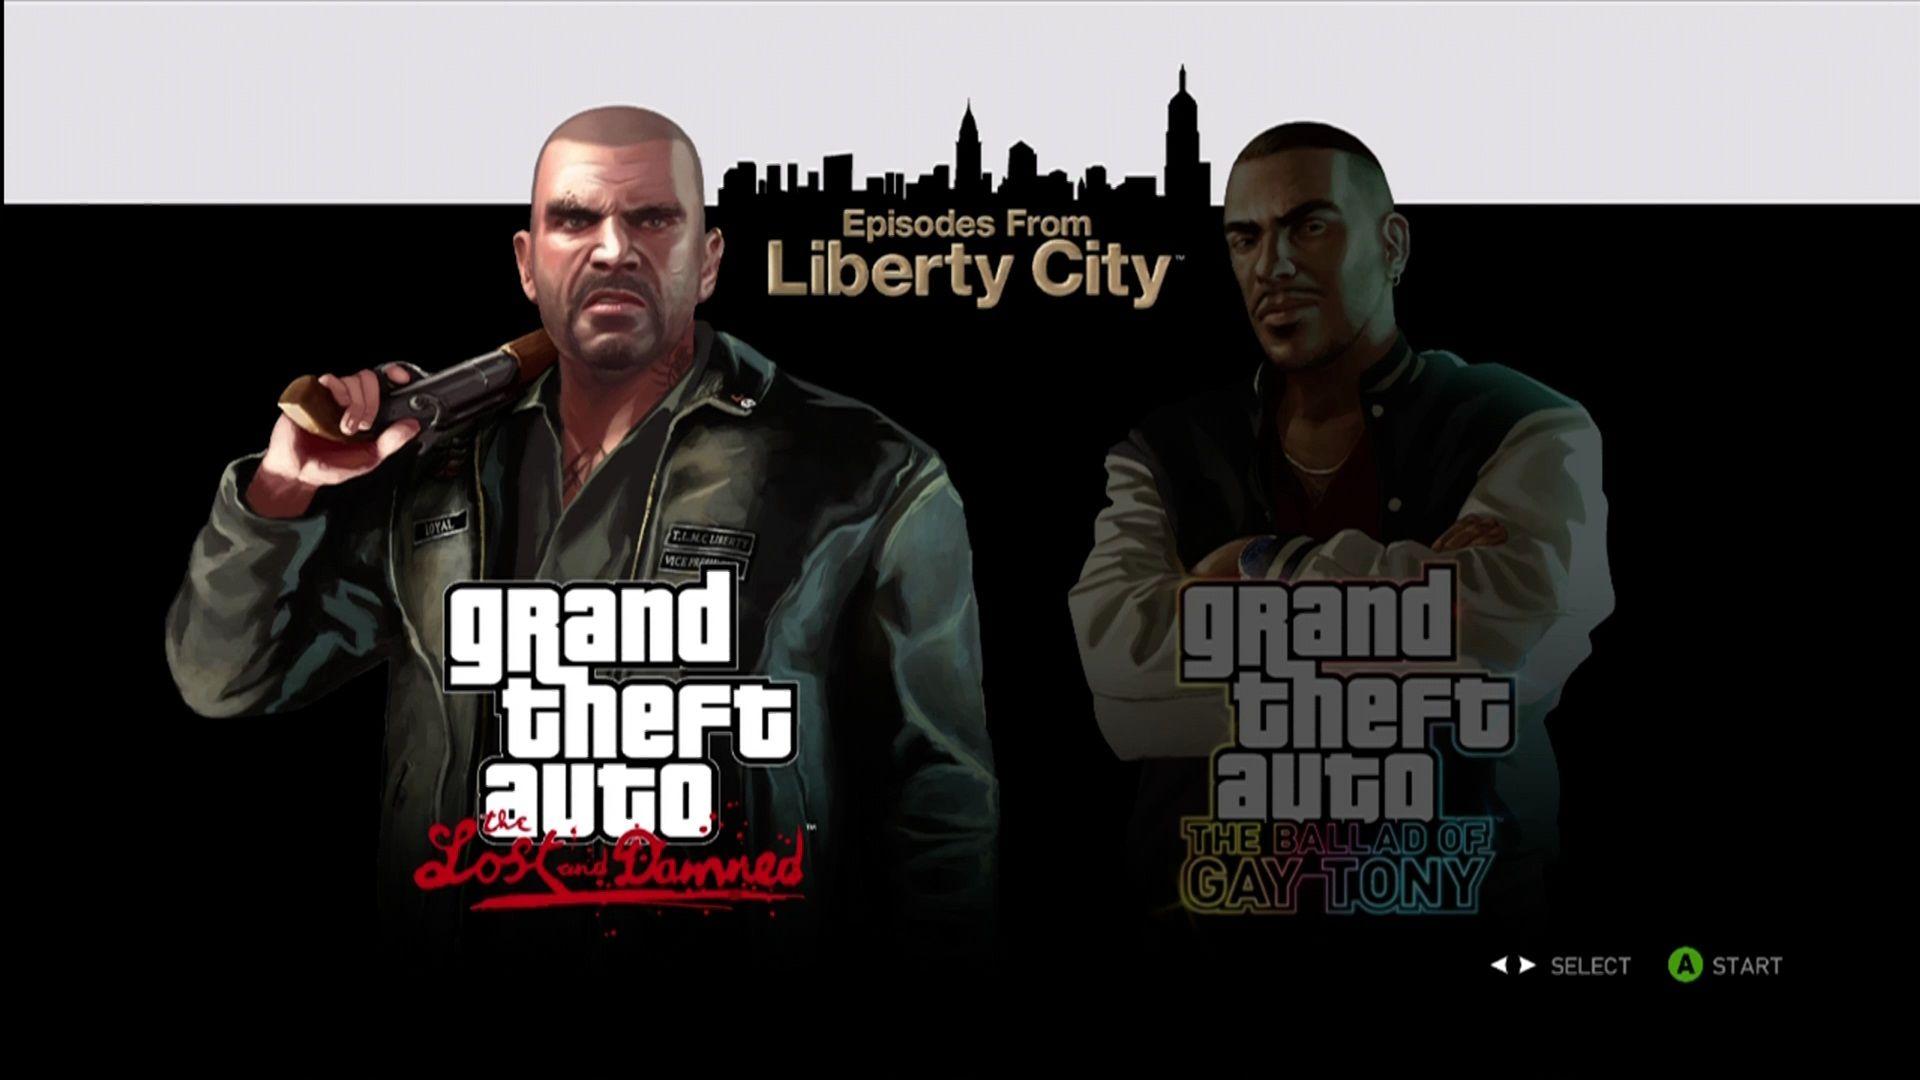 BH GAMES - A Mais Completa Loja de Games de Belo Horizonte - Grand Theft  Auto: Episodes from Liberty City - Xbox 360